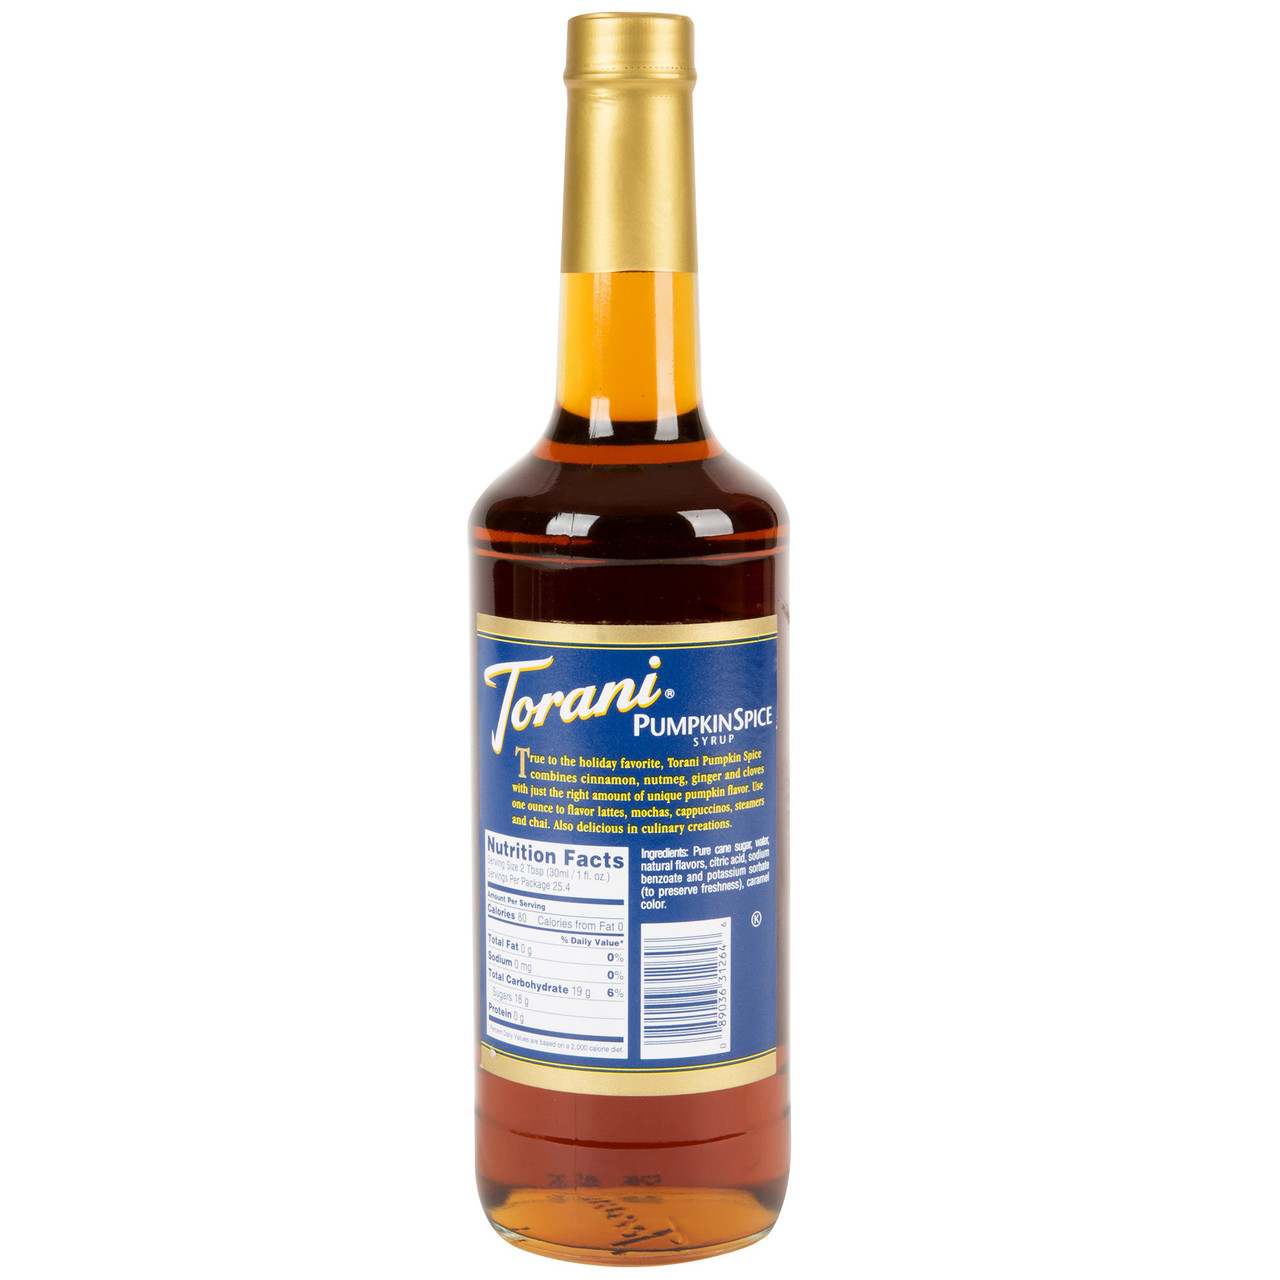 Torani 750mL Pumpkin Spice Flavoring Syrup